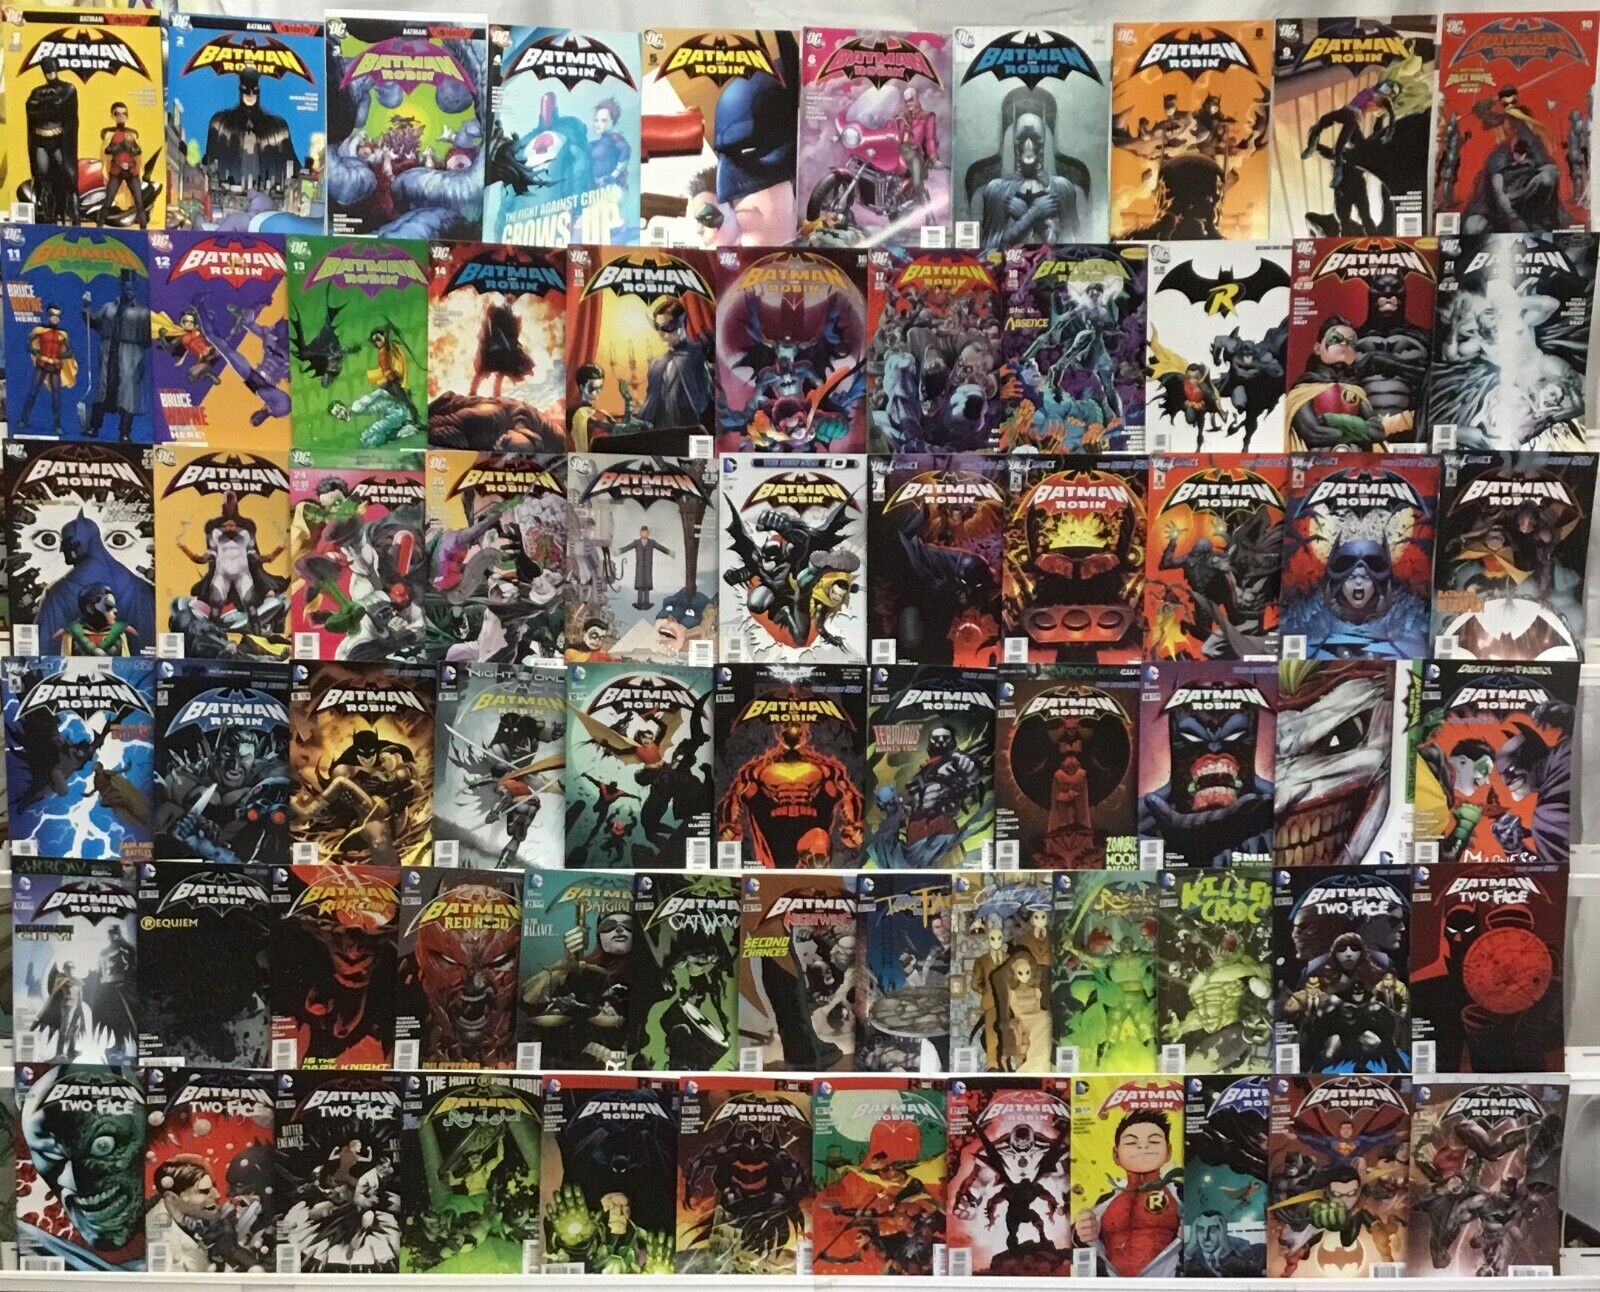 DC Comics Batman and Robin Volume 1 & 2 - Volume 2 Missing 29-31,33, Annual 1,2